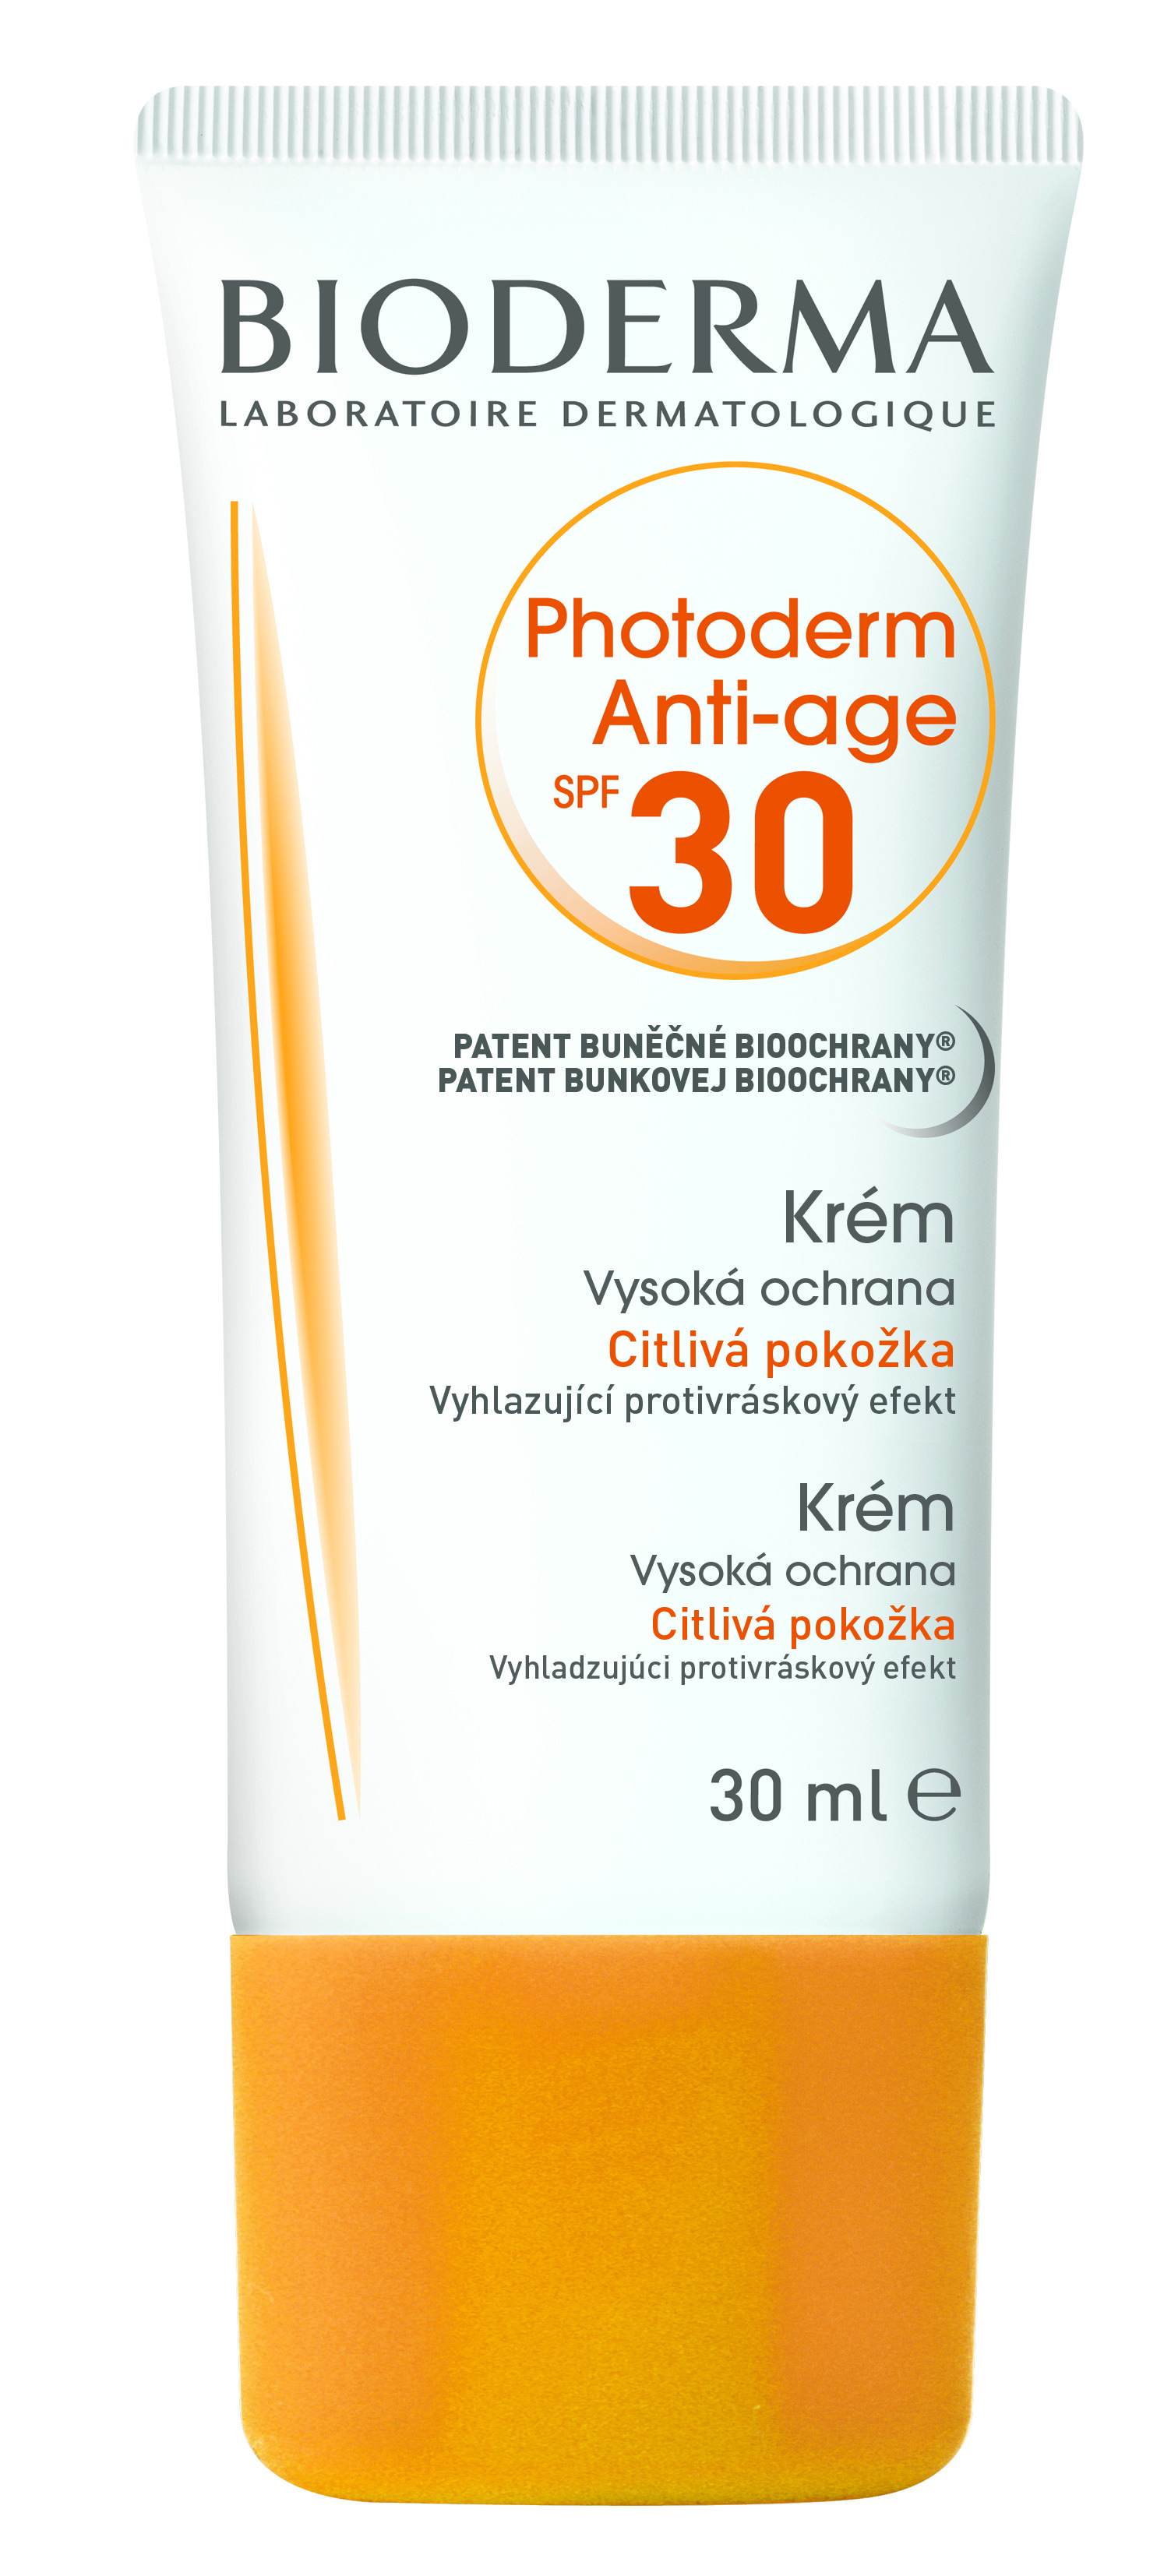 BIODERMA PHOTODERM SPF 30 Anti- Age 30 ml